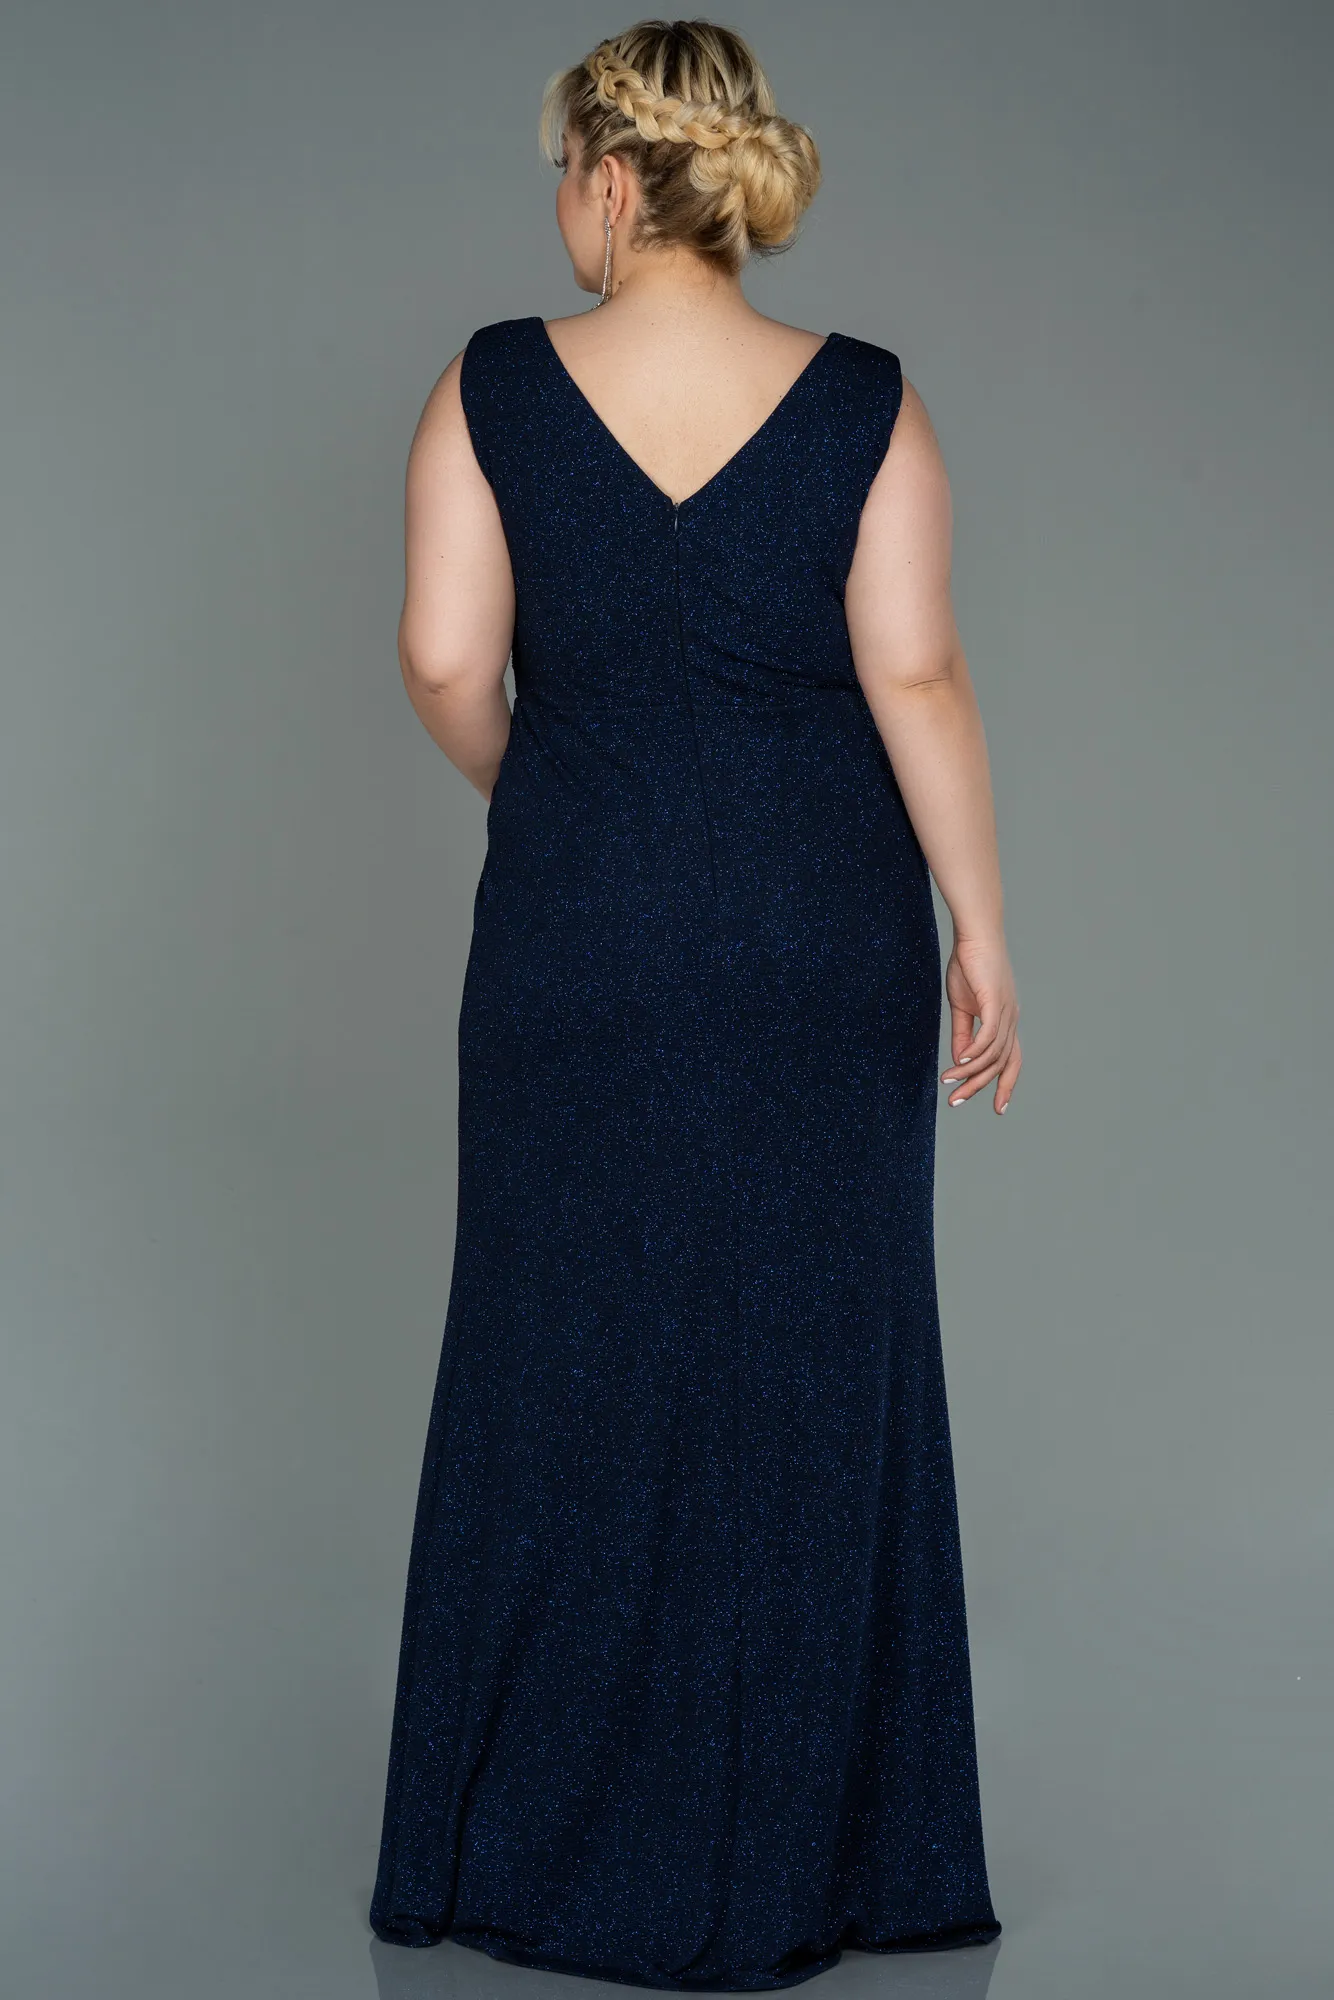 Navy Blue-Long Plus Size Evening Dress ABU3074